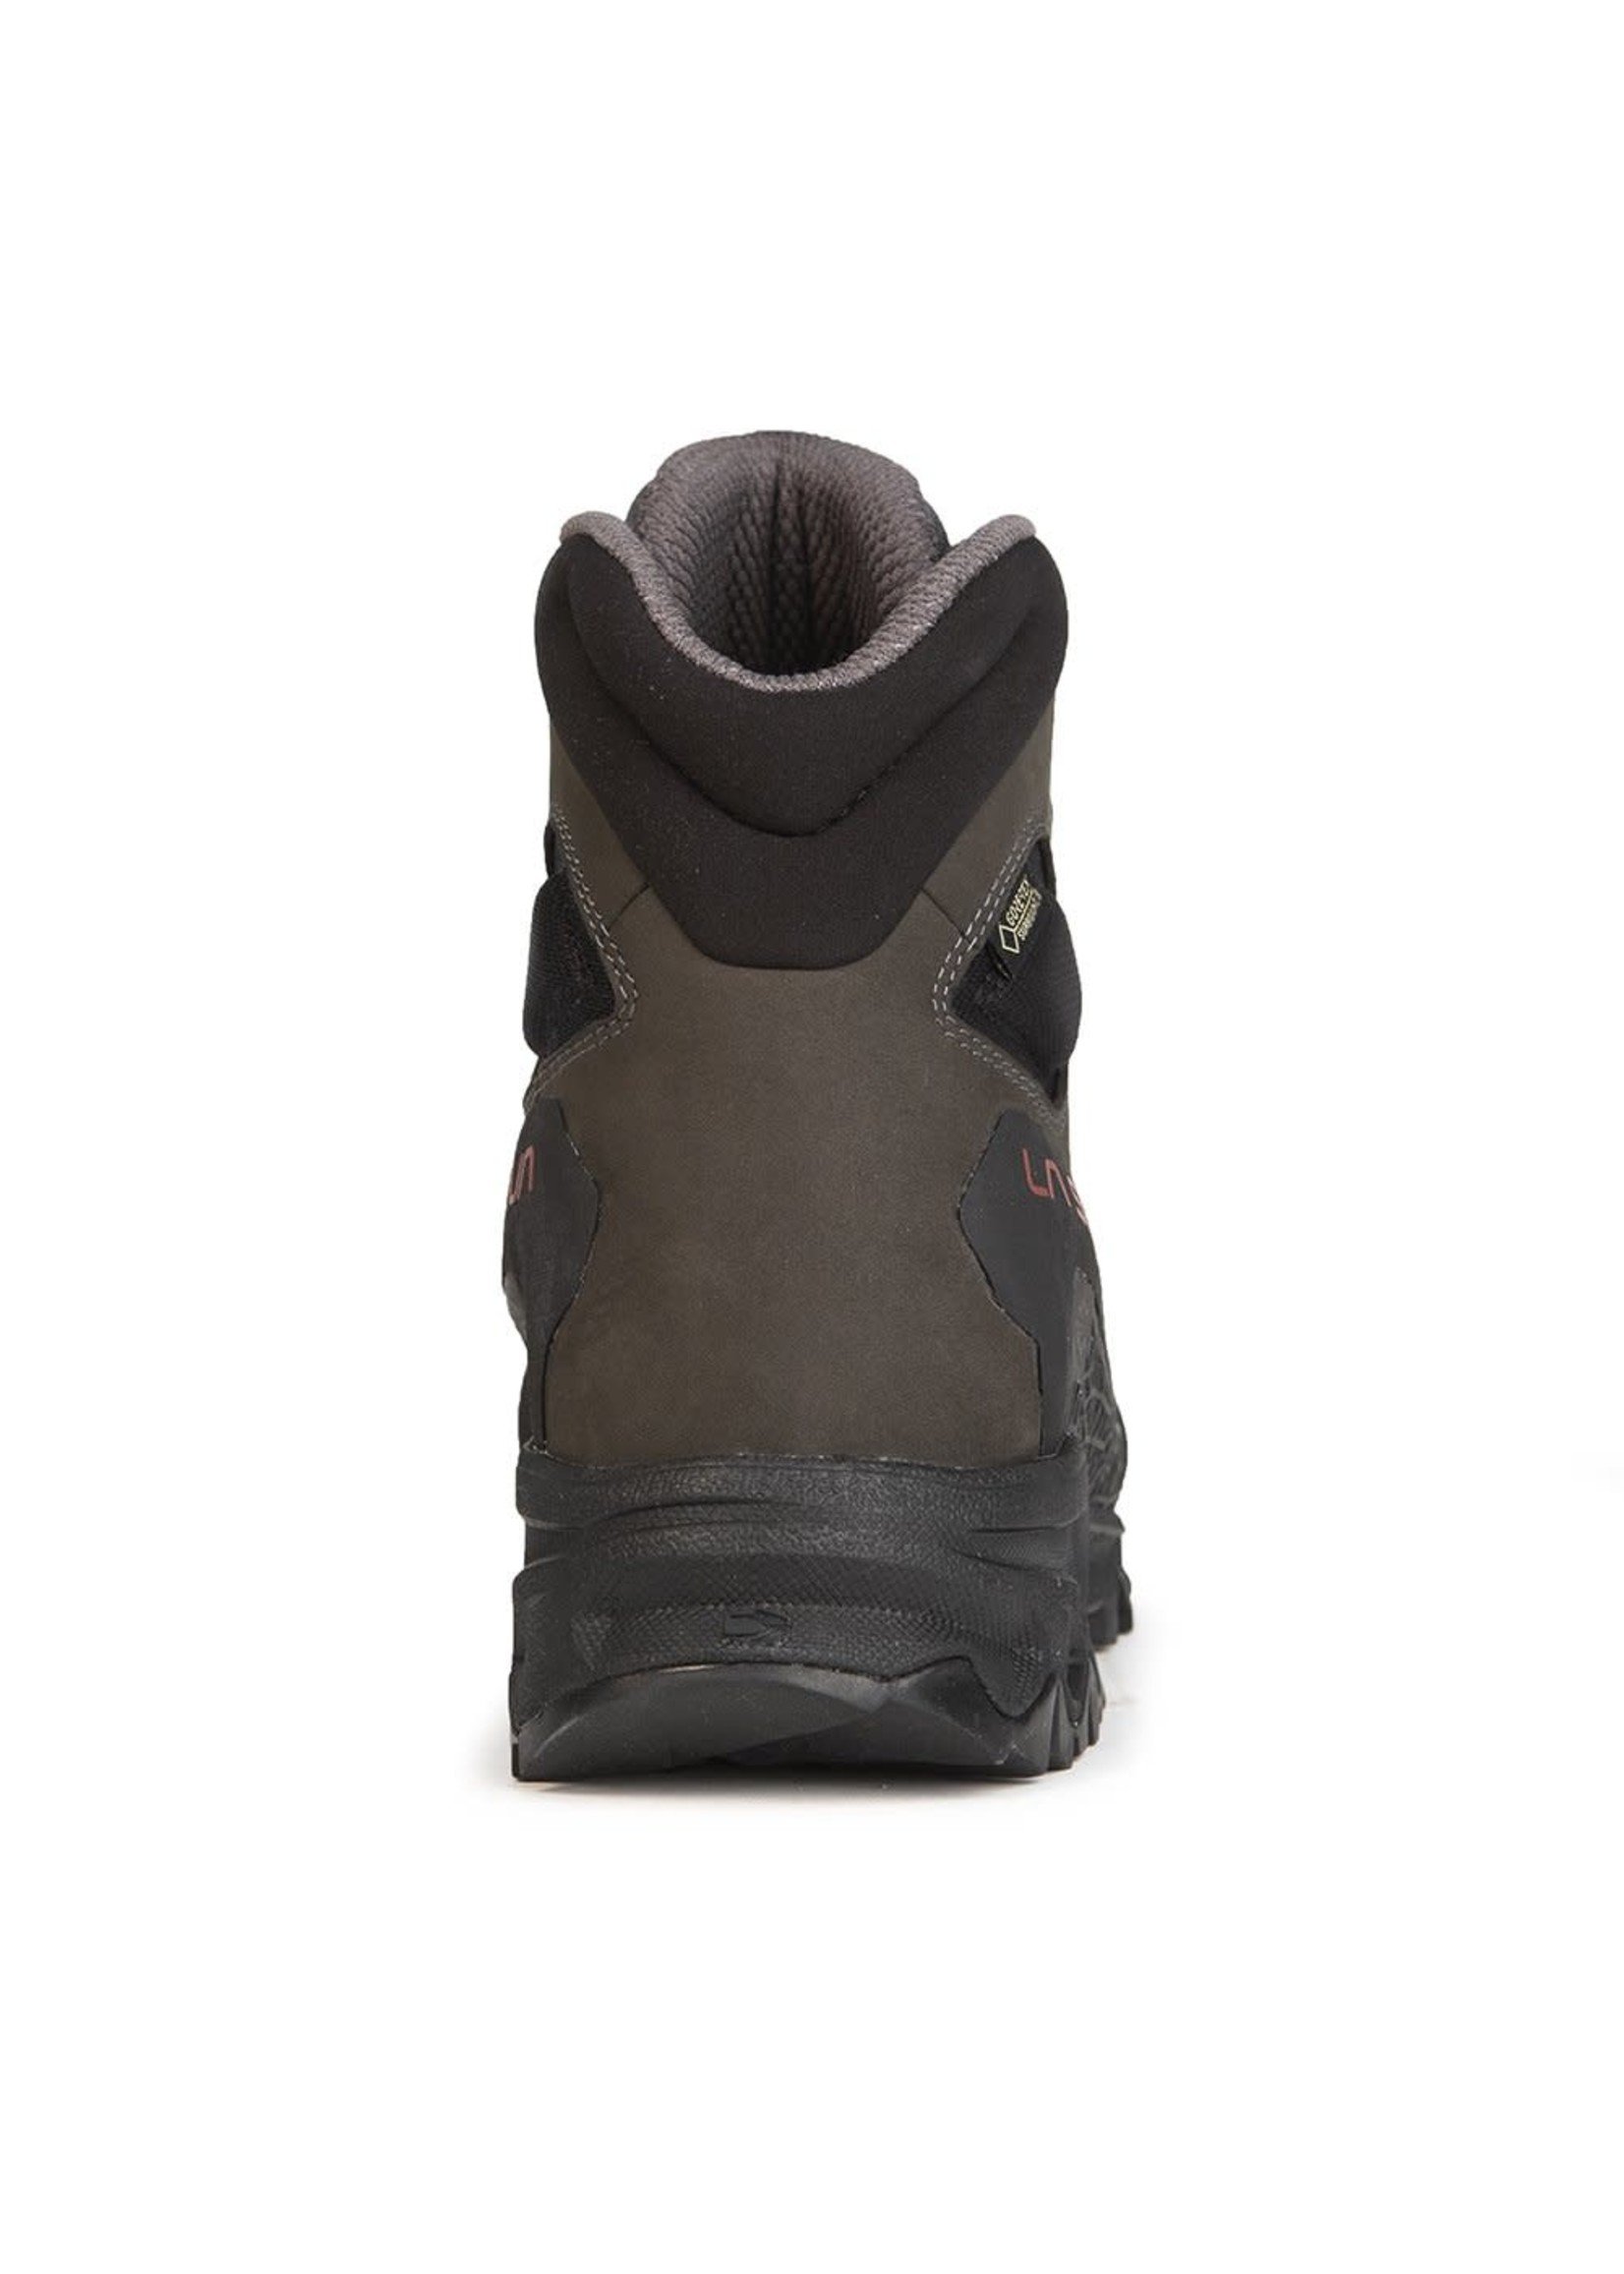 La Sportiva La Sportiva Nucleo High II GTX Hiking Boots - Men